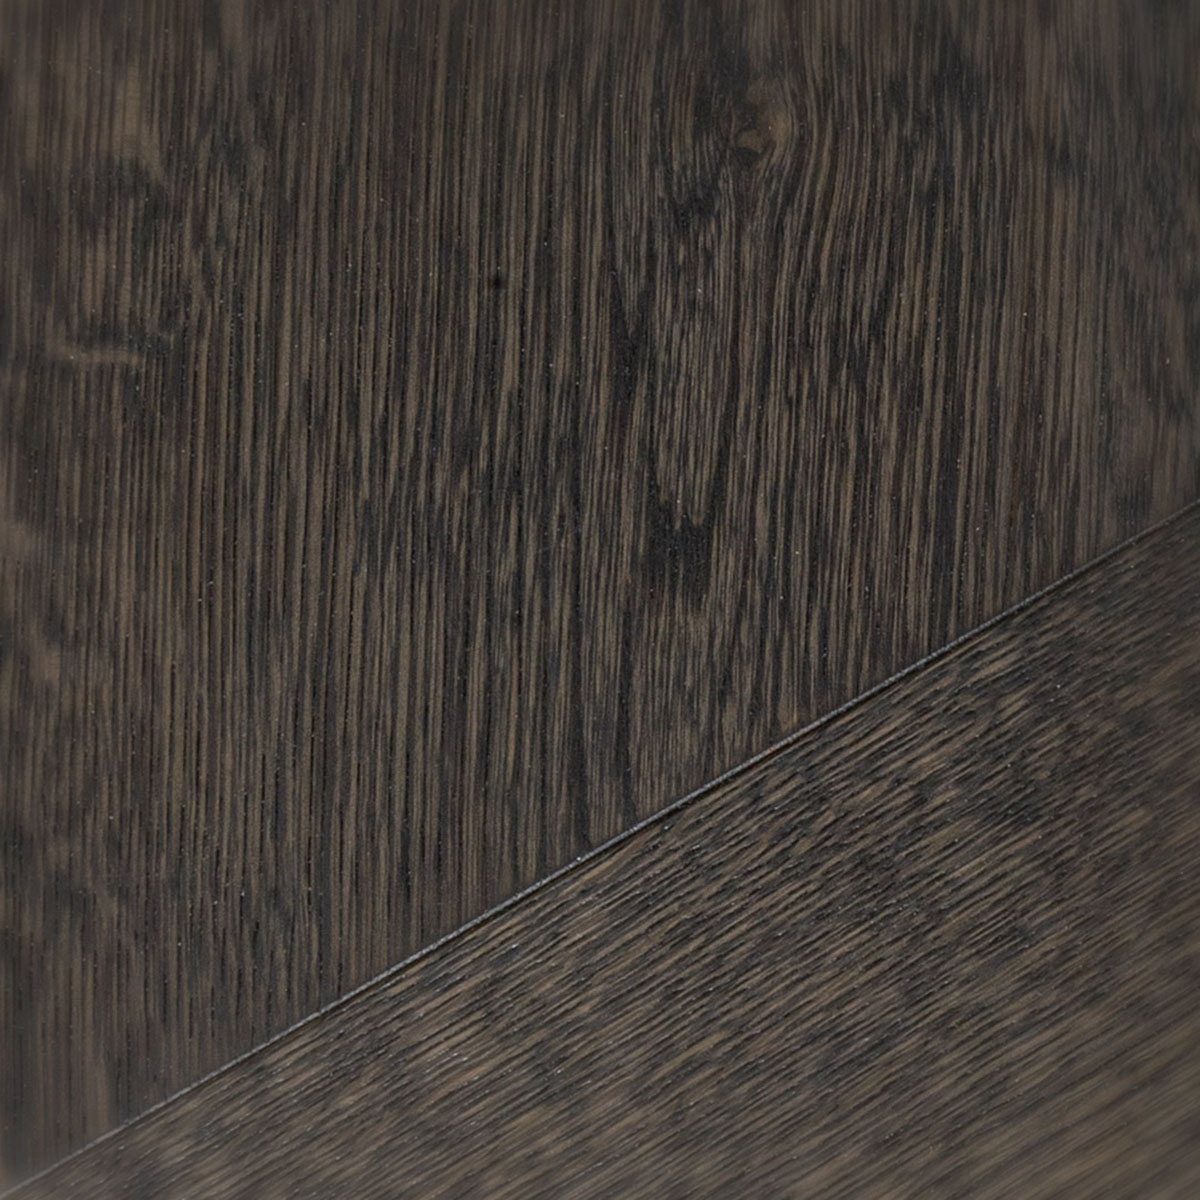 Brynton Close - Geometric Diamond Shaped Wood Floor close-up